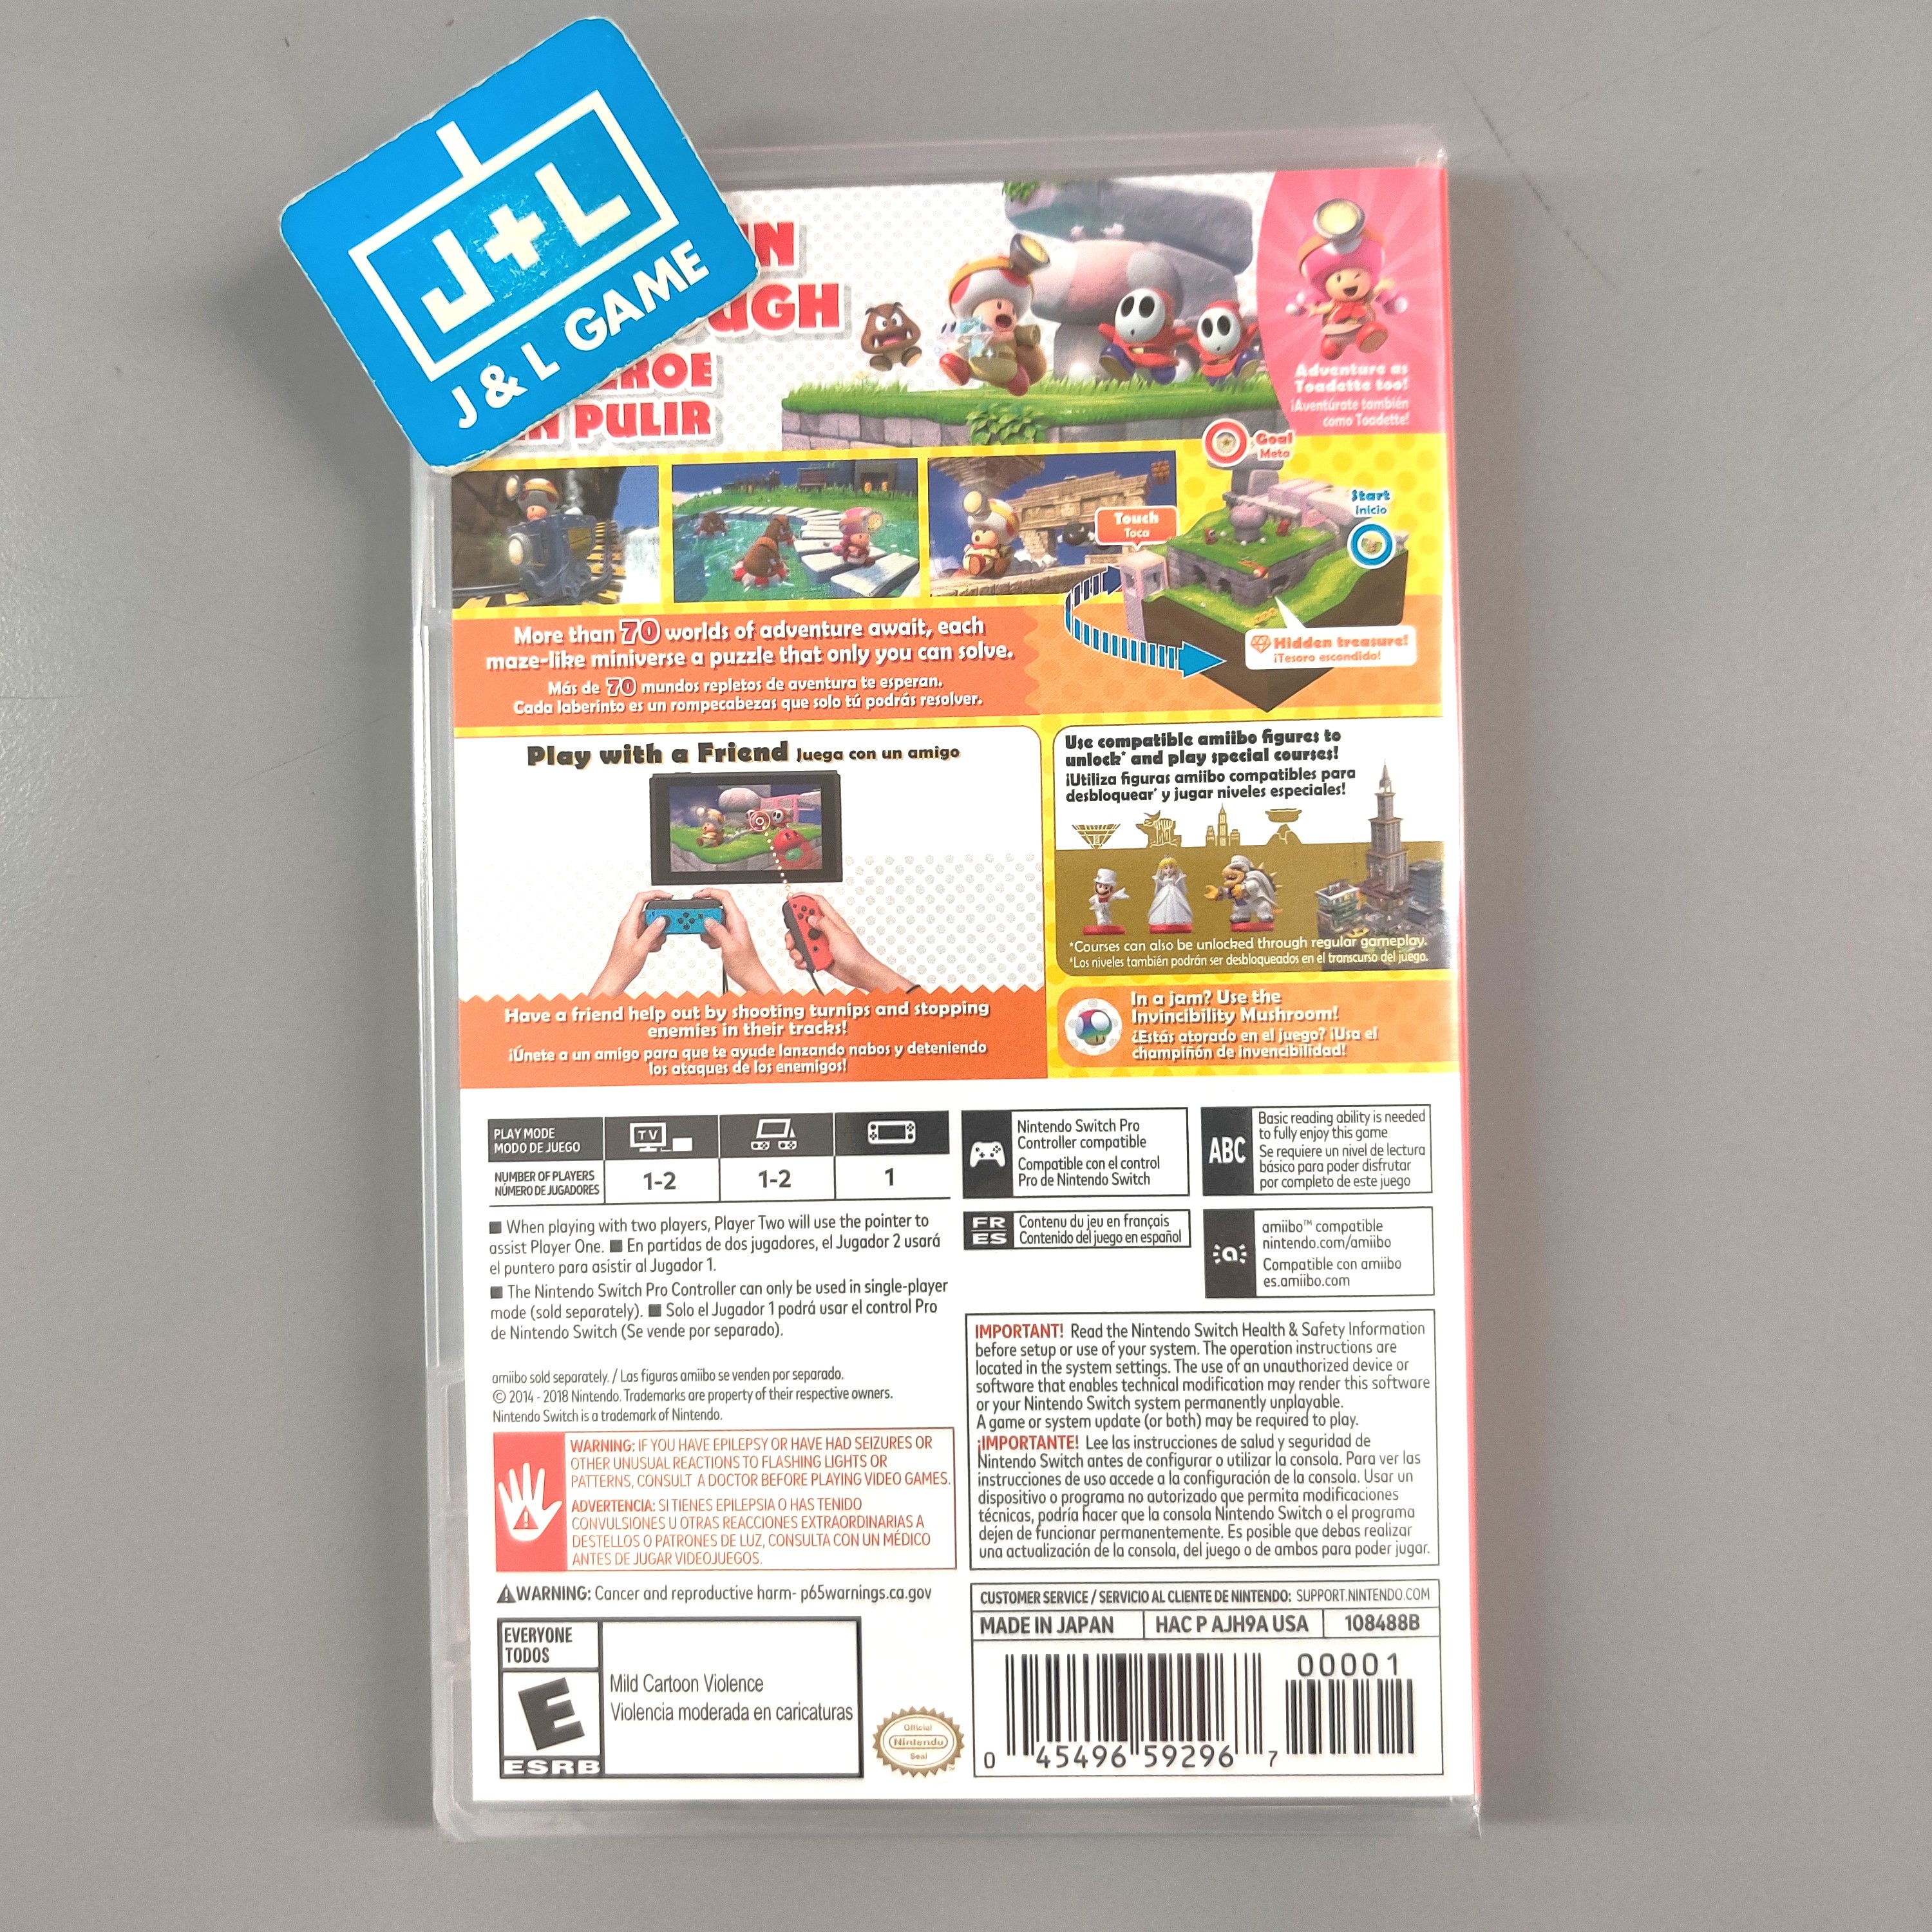 Captain Toad: Treasure Tracker - (NSW) Nintendo Switch Video Games Nintendo   